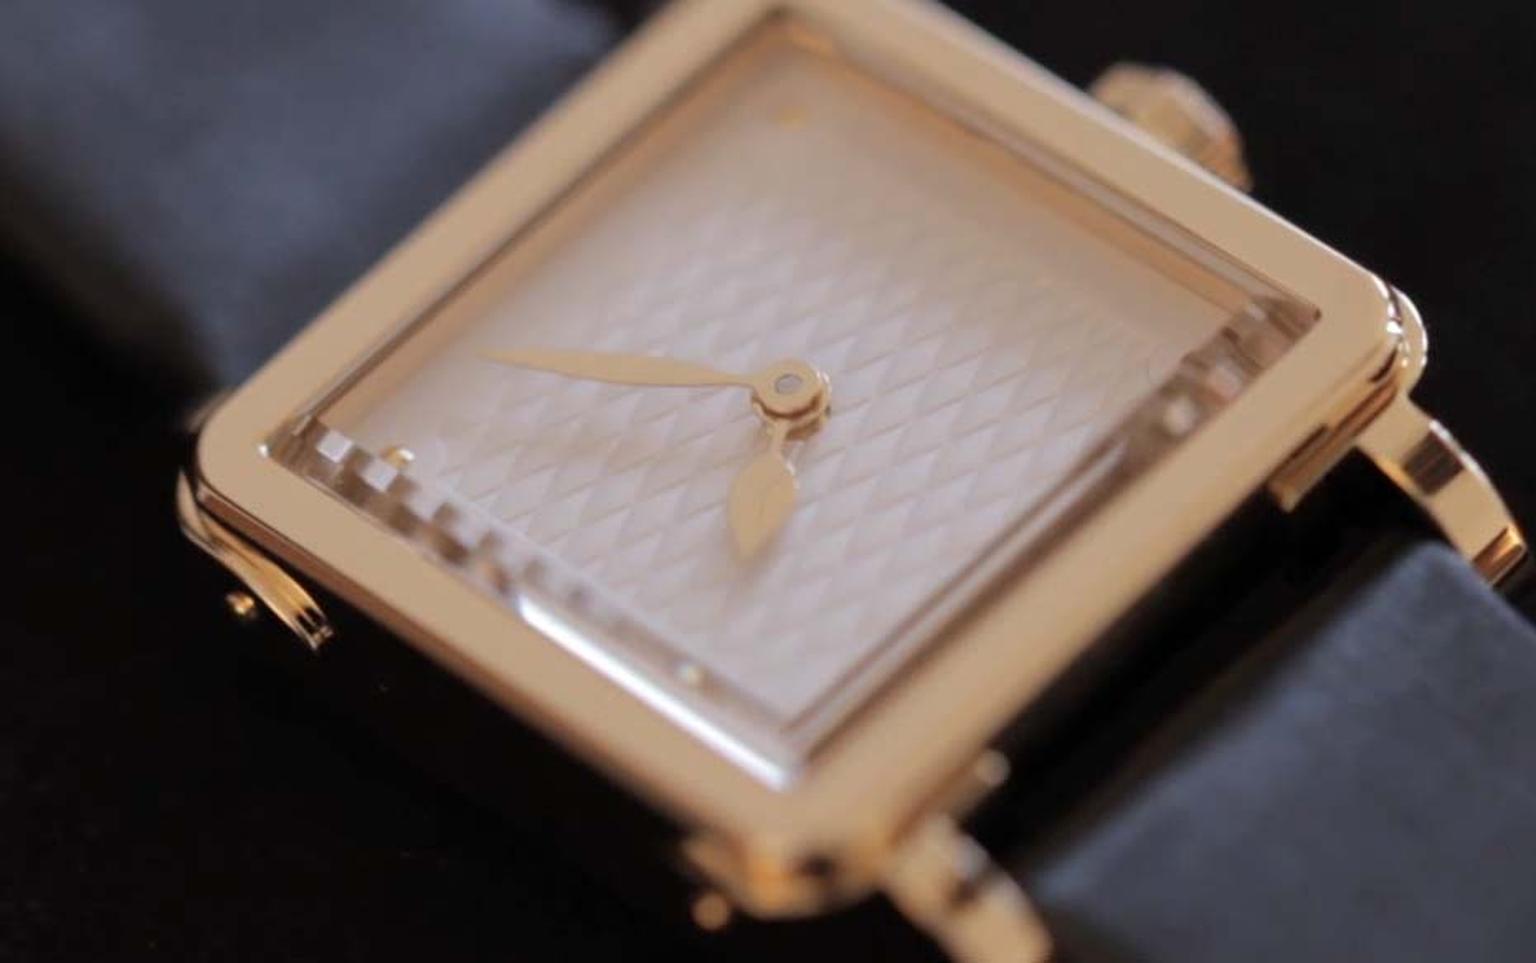 Dentelle de Monogram white mother-of-pearl watch, Louis Vuitton